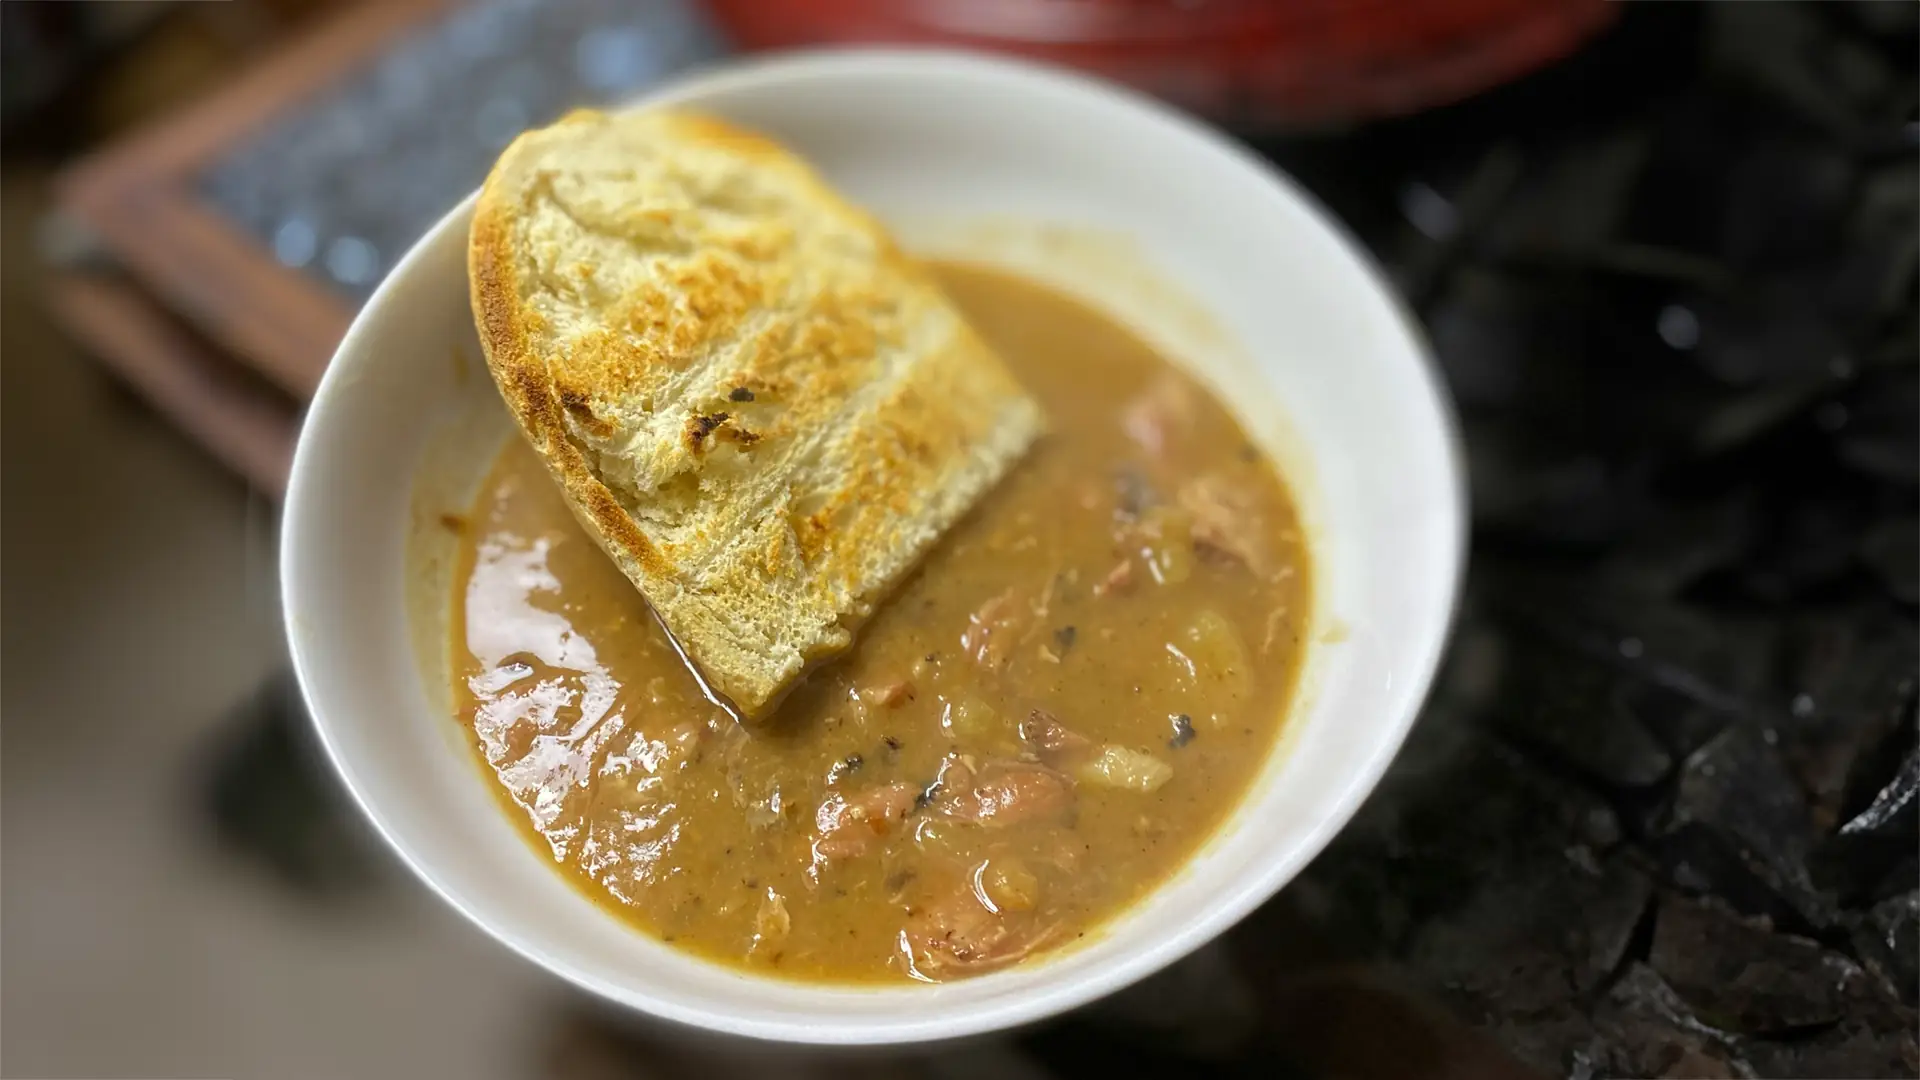 My pea and ham soup recipe